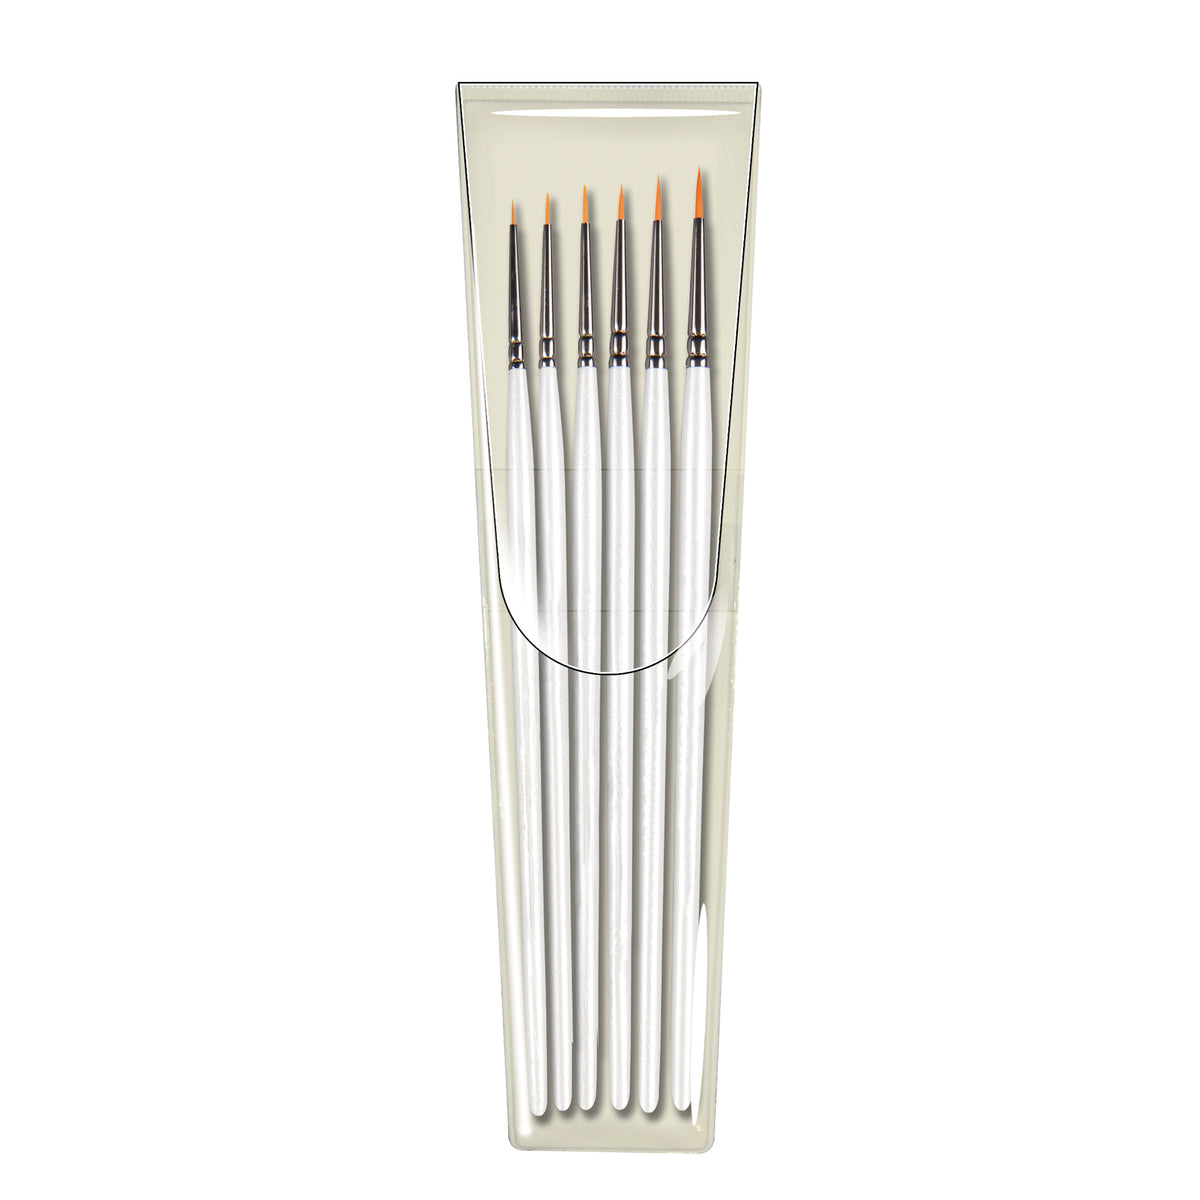 Pro Arte Masterstroke Miniature Brushes - Set of 6 in Packaging 